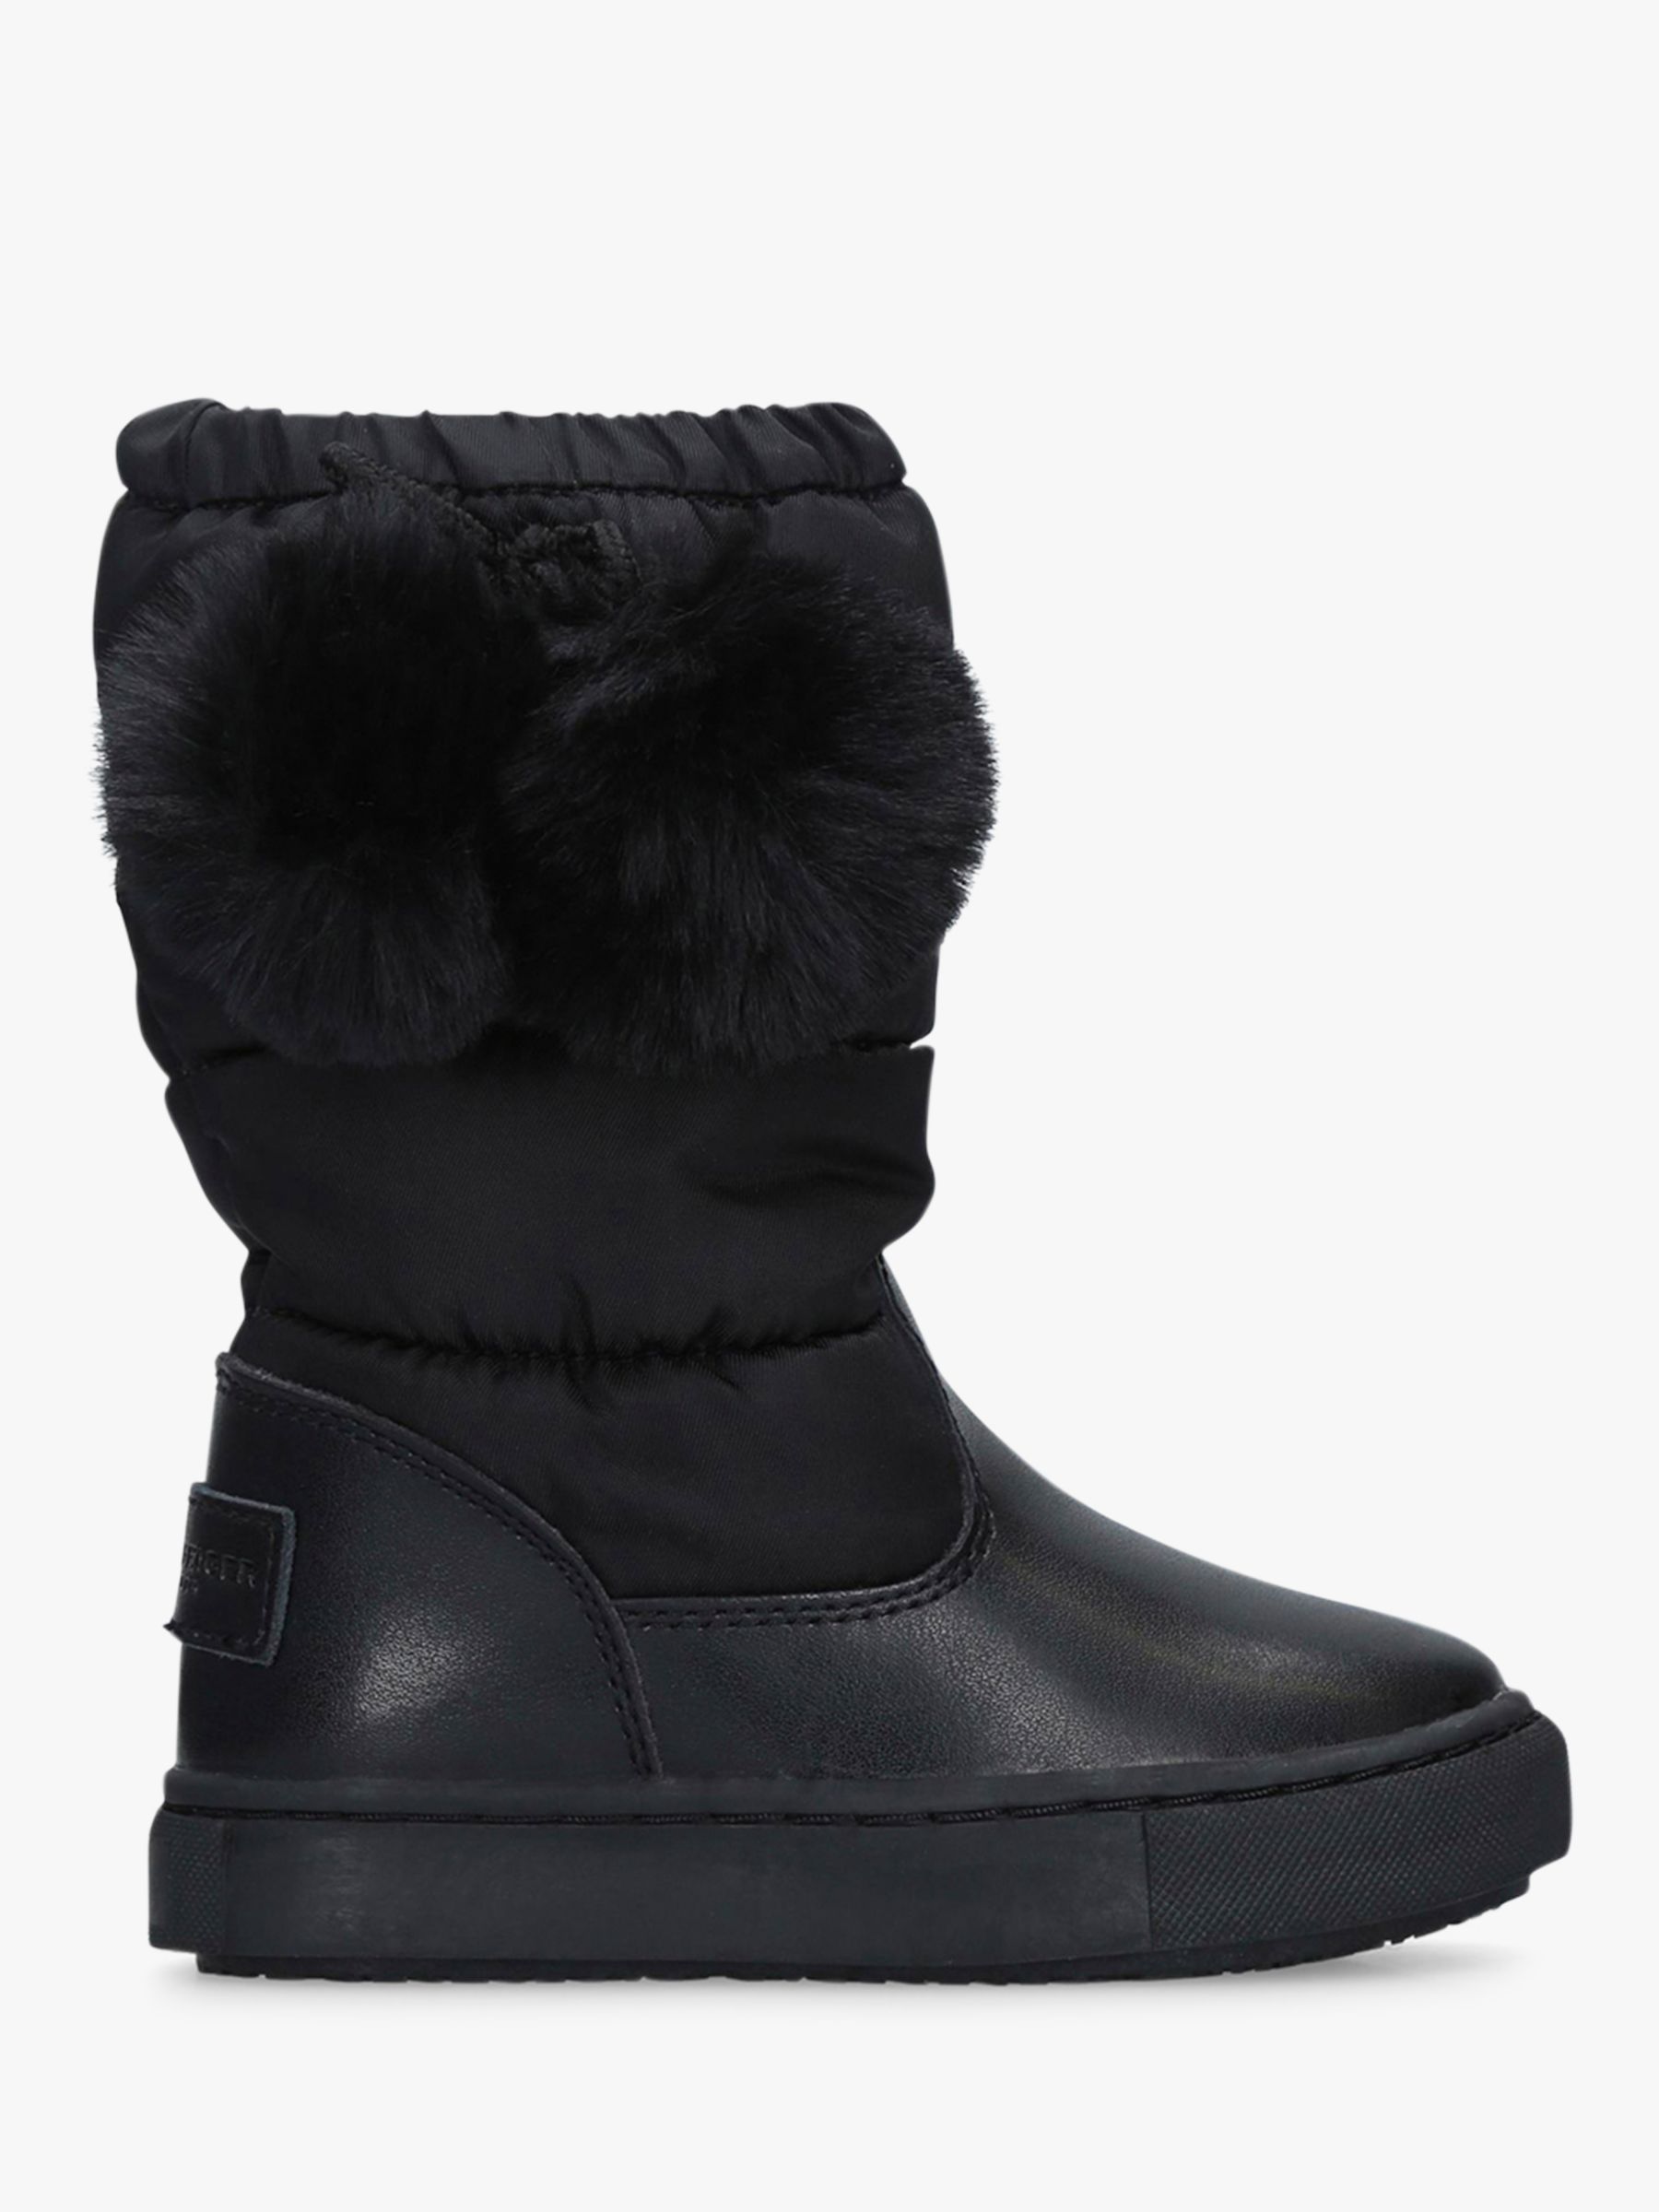 Kurt Geiger London Children's Arctic Boots, Black